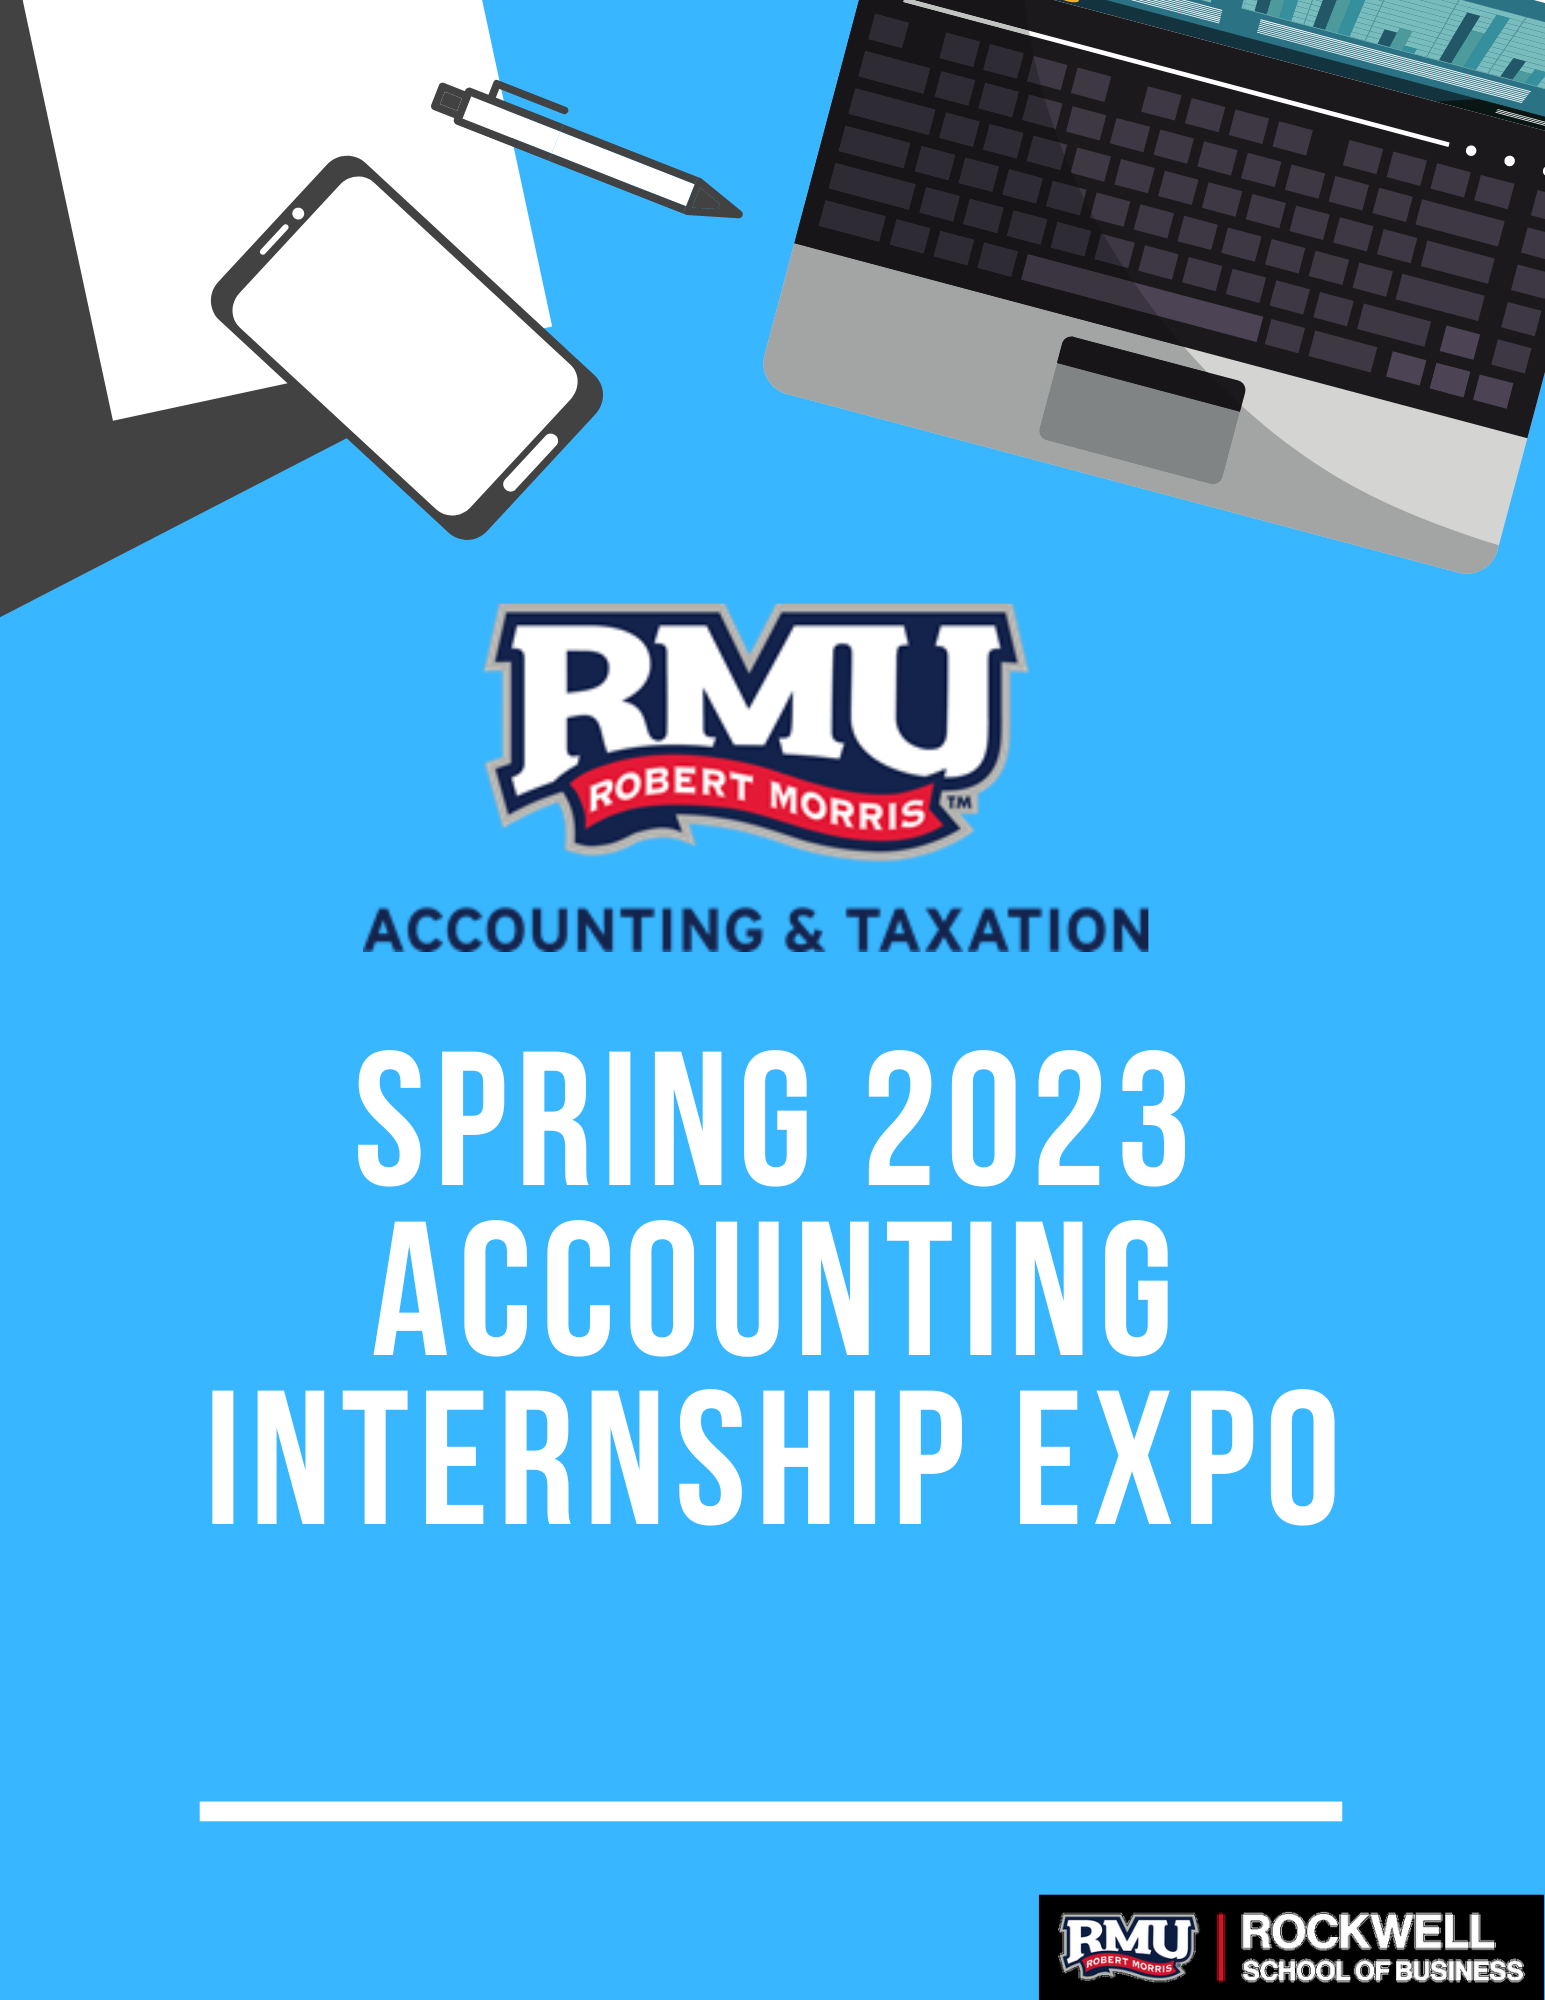 Spring 2023 Accounting Internship Expo Robert Morris University